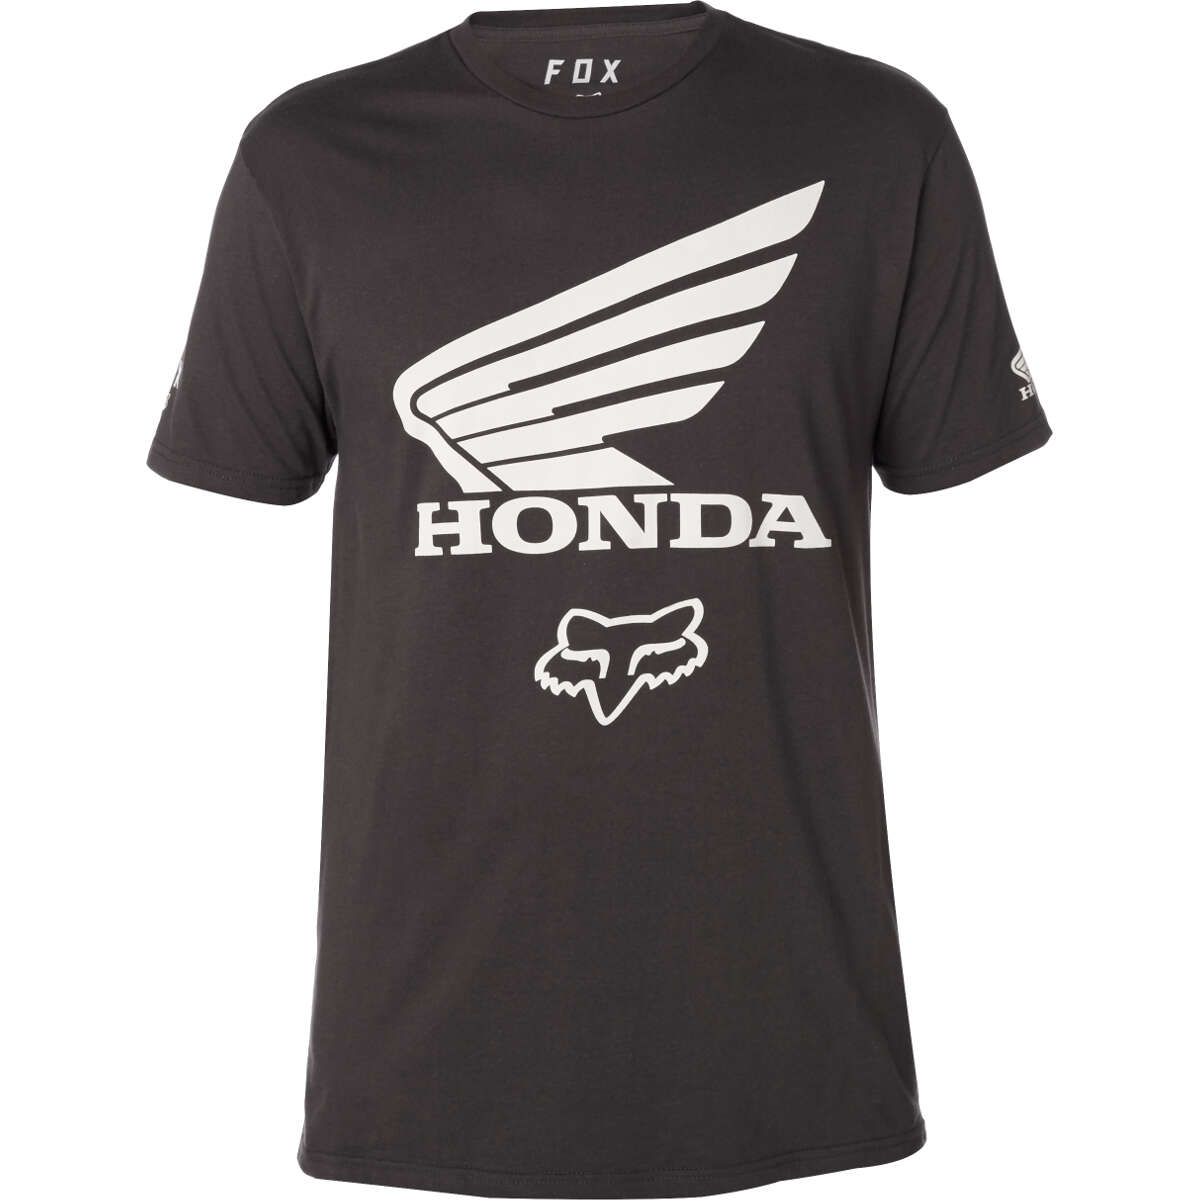 Fox T-Shirt Honda Premium Vintage Schwarz